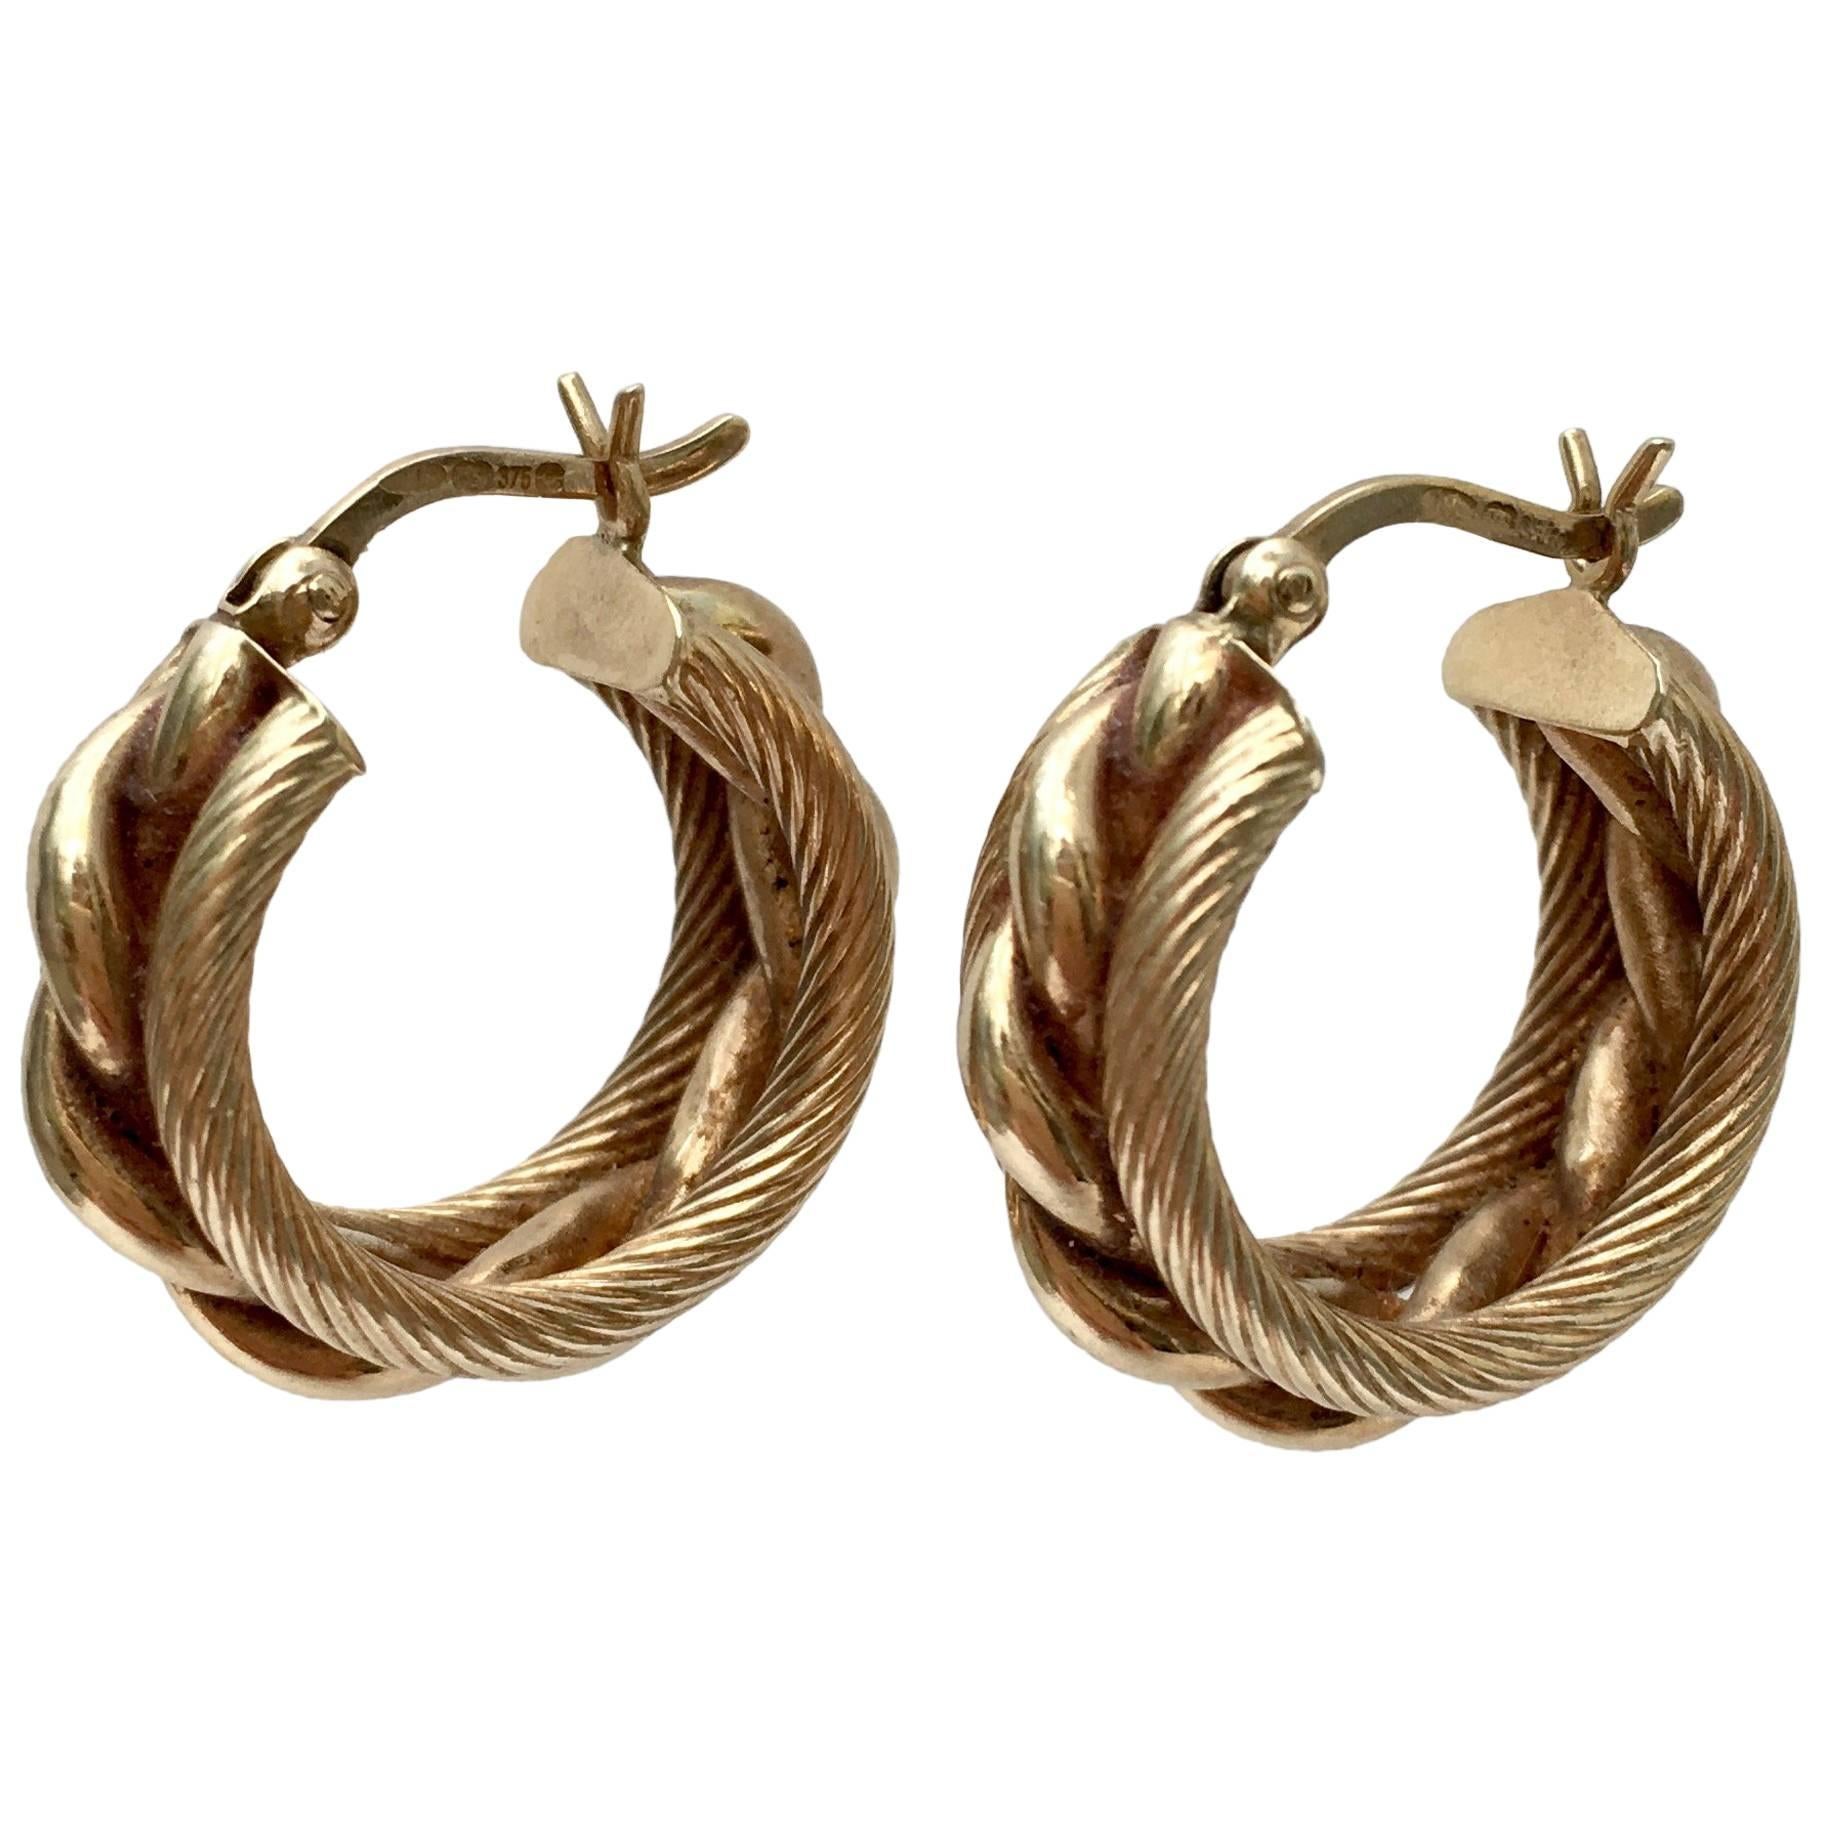 Gold Hoop Earrings Twisted Rope Braided Nautical Vintage Jewelry Chunky Hoops